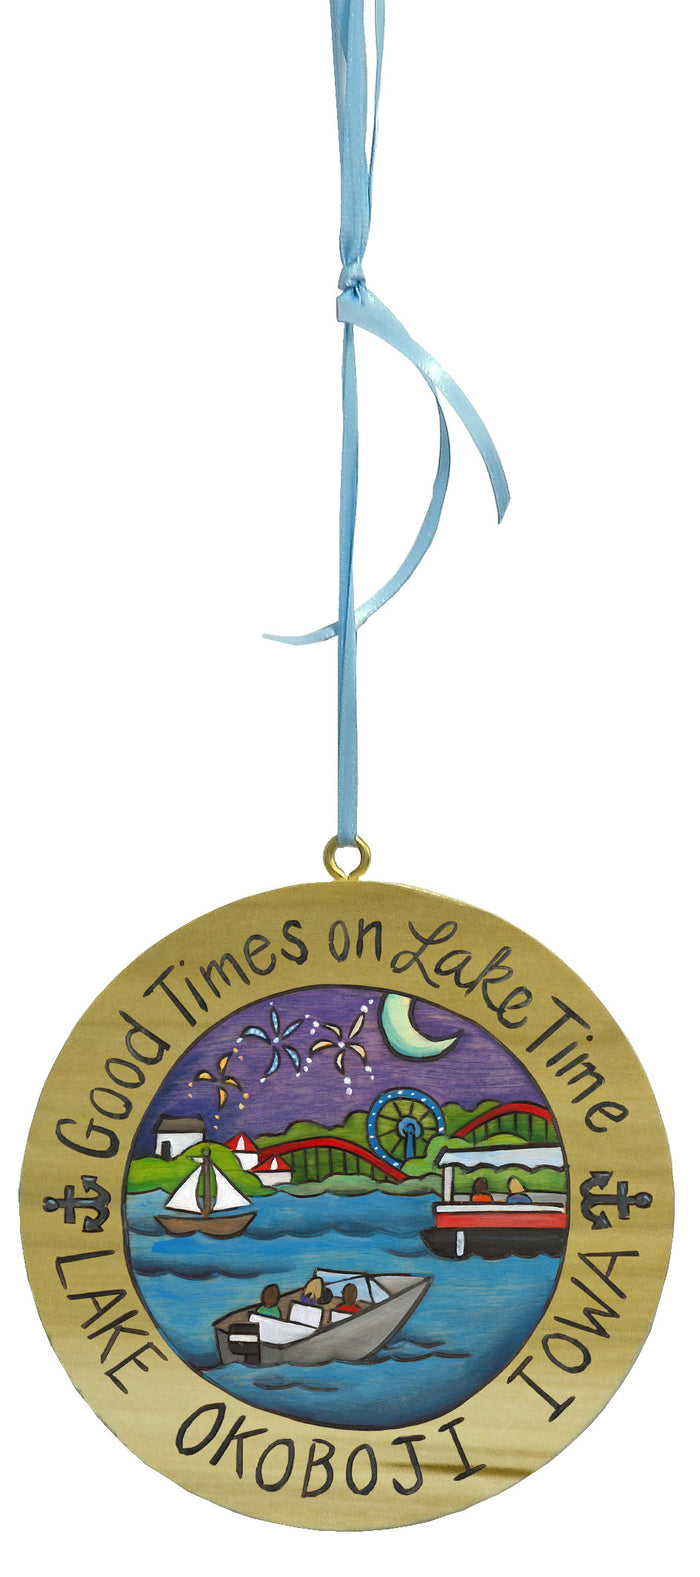 "Good Times" Okoboji Circle Ornament